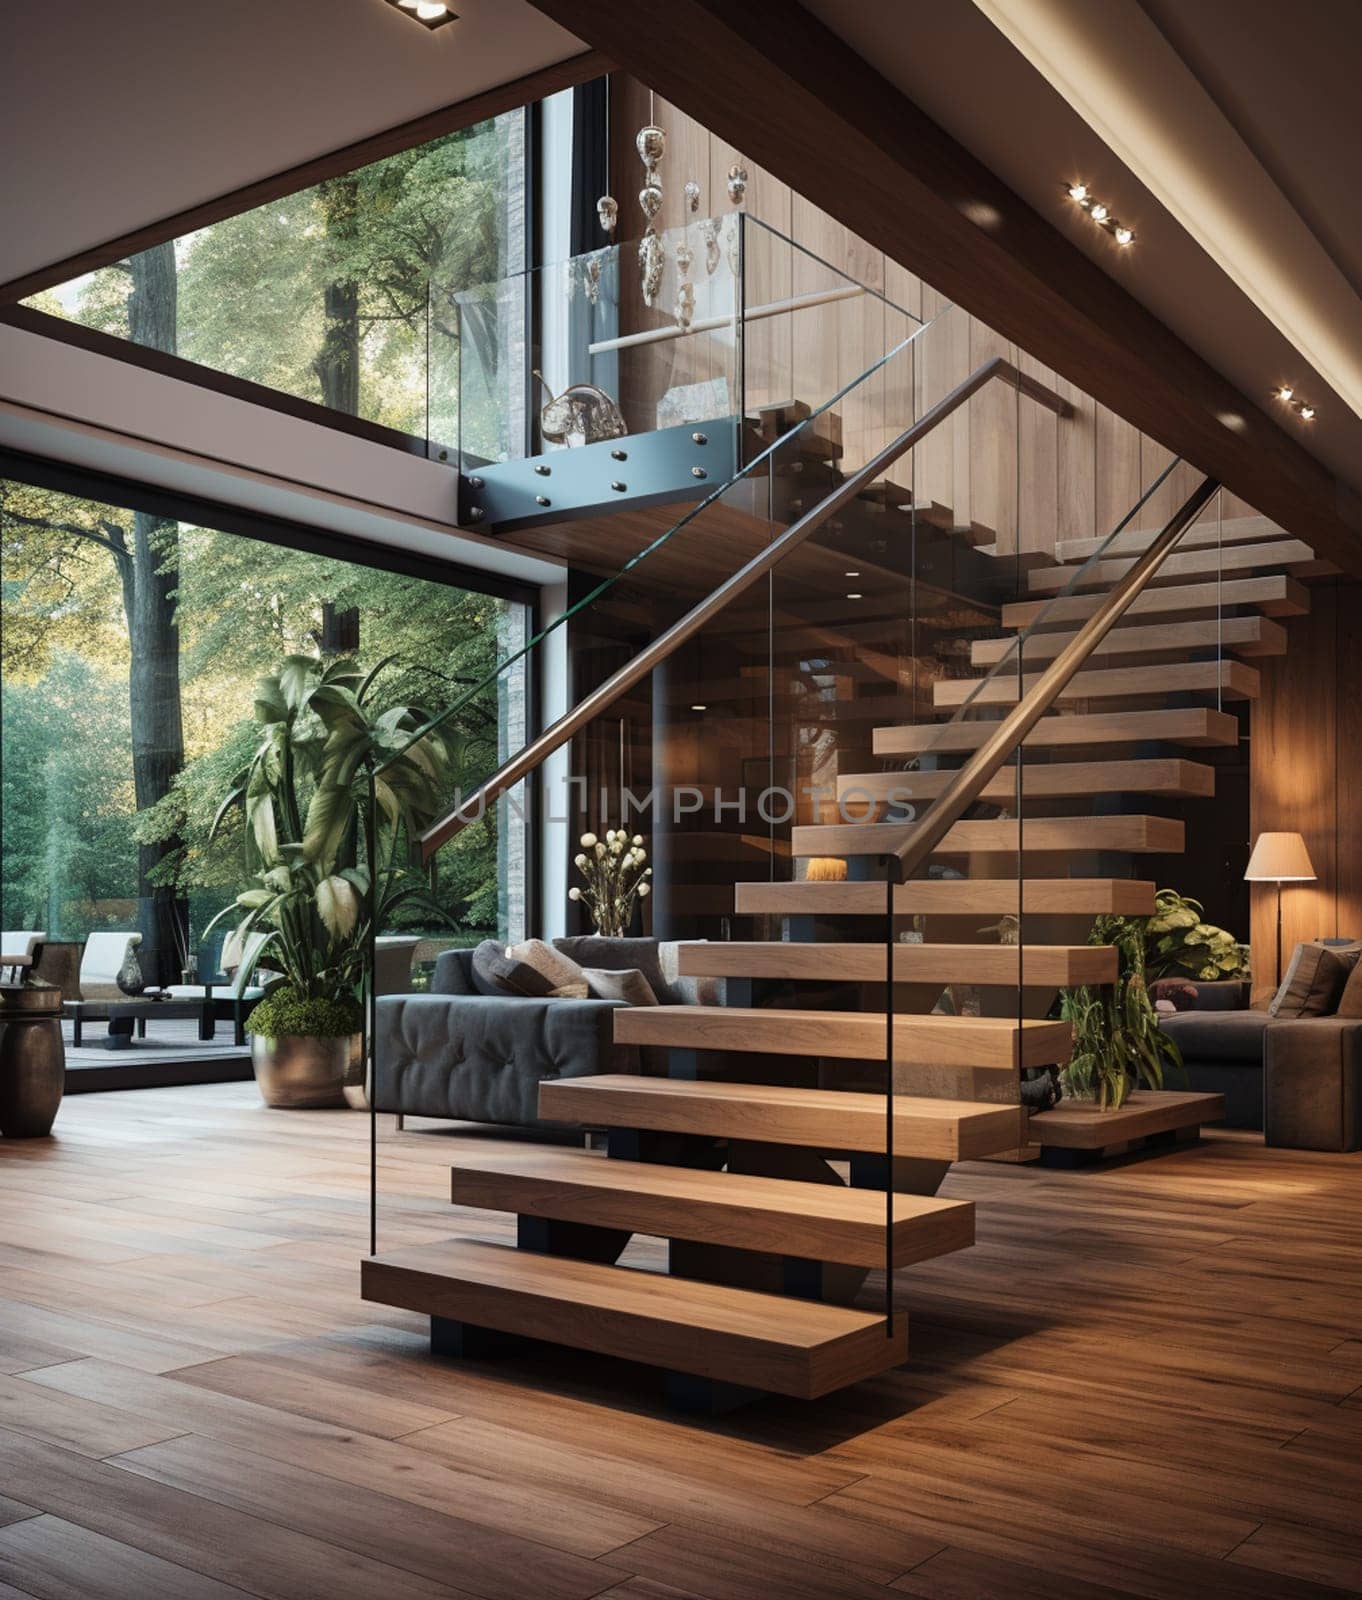 Glass staircase custom home build. High quality photo